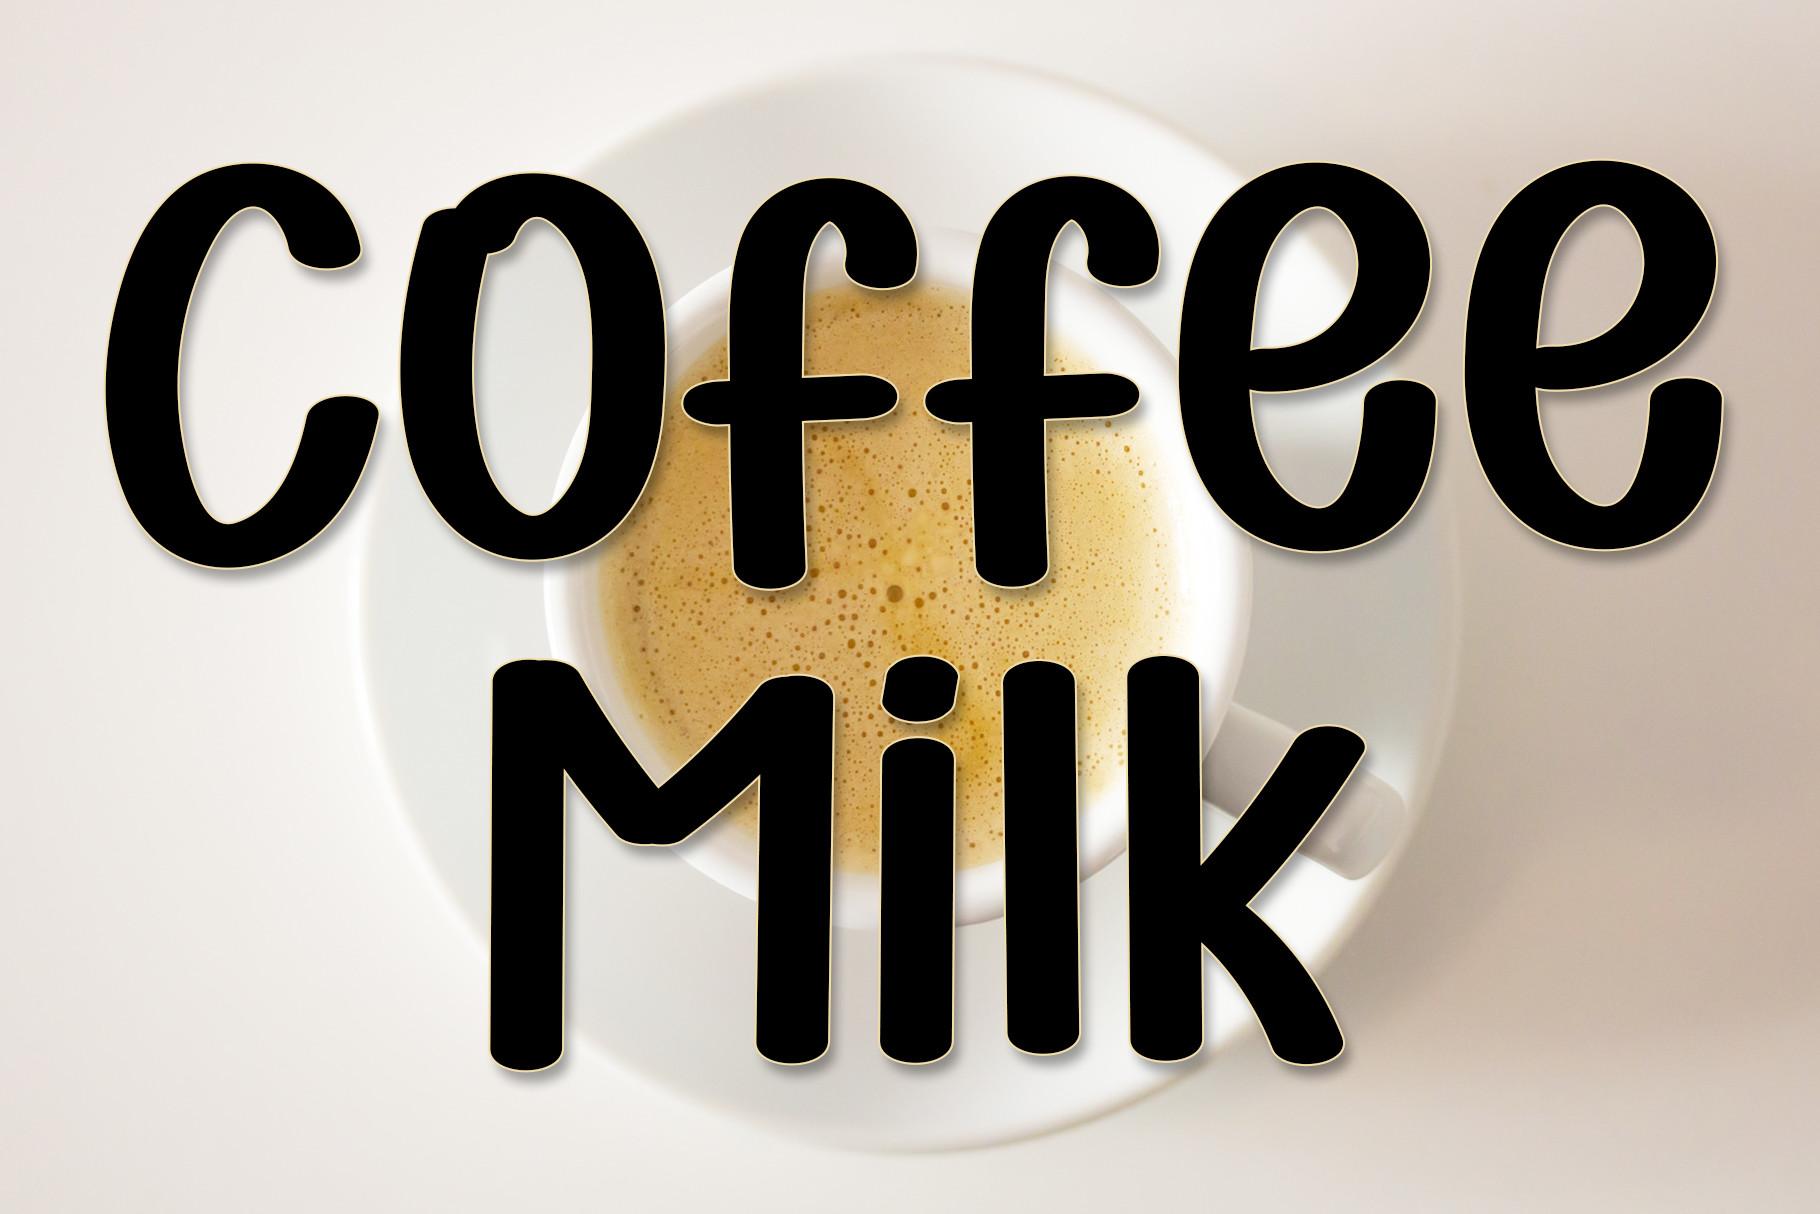 Coffee Milk Font